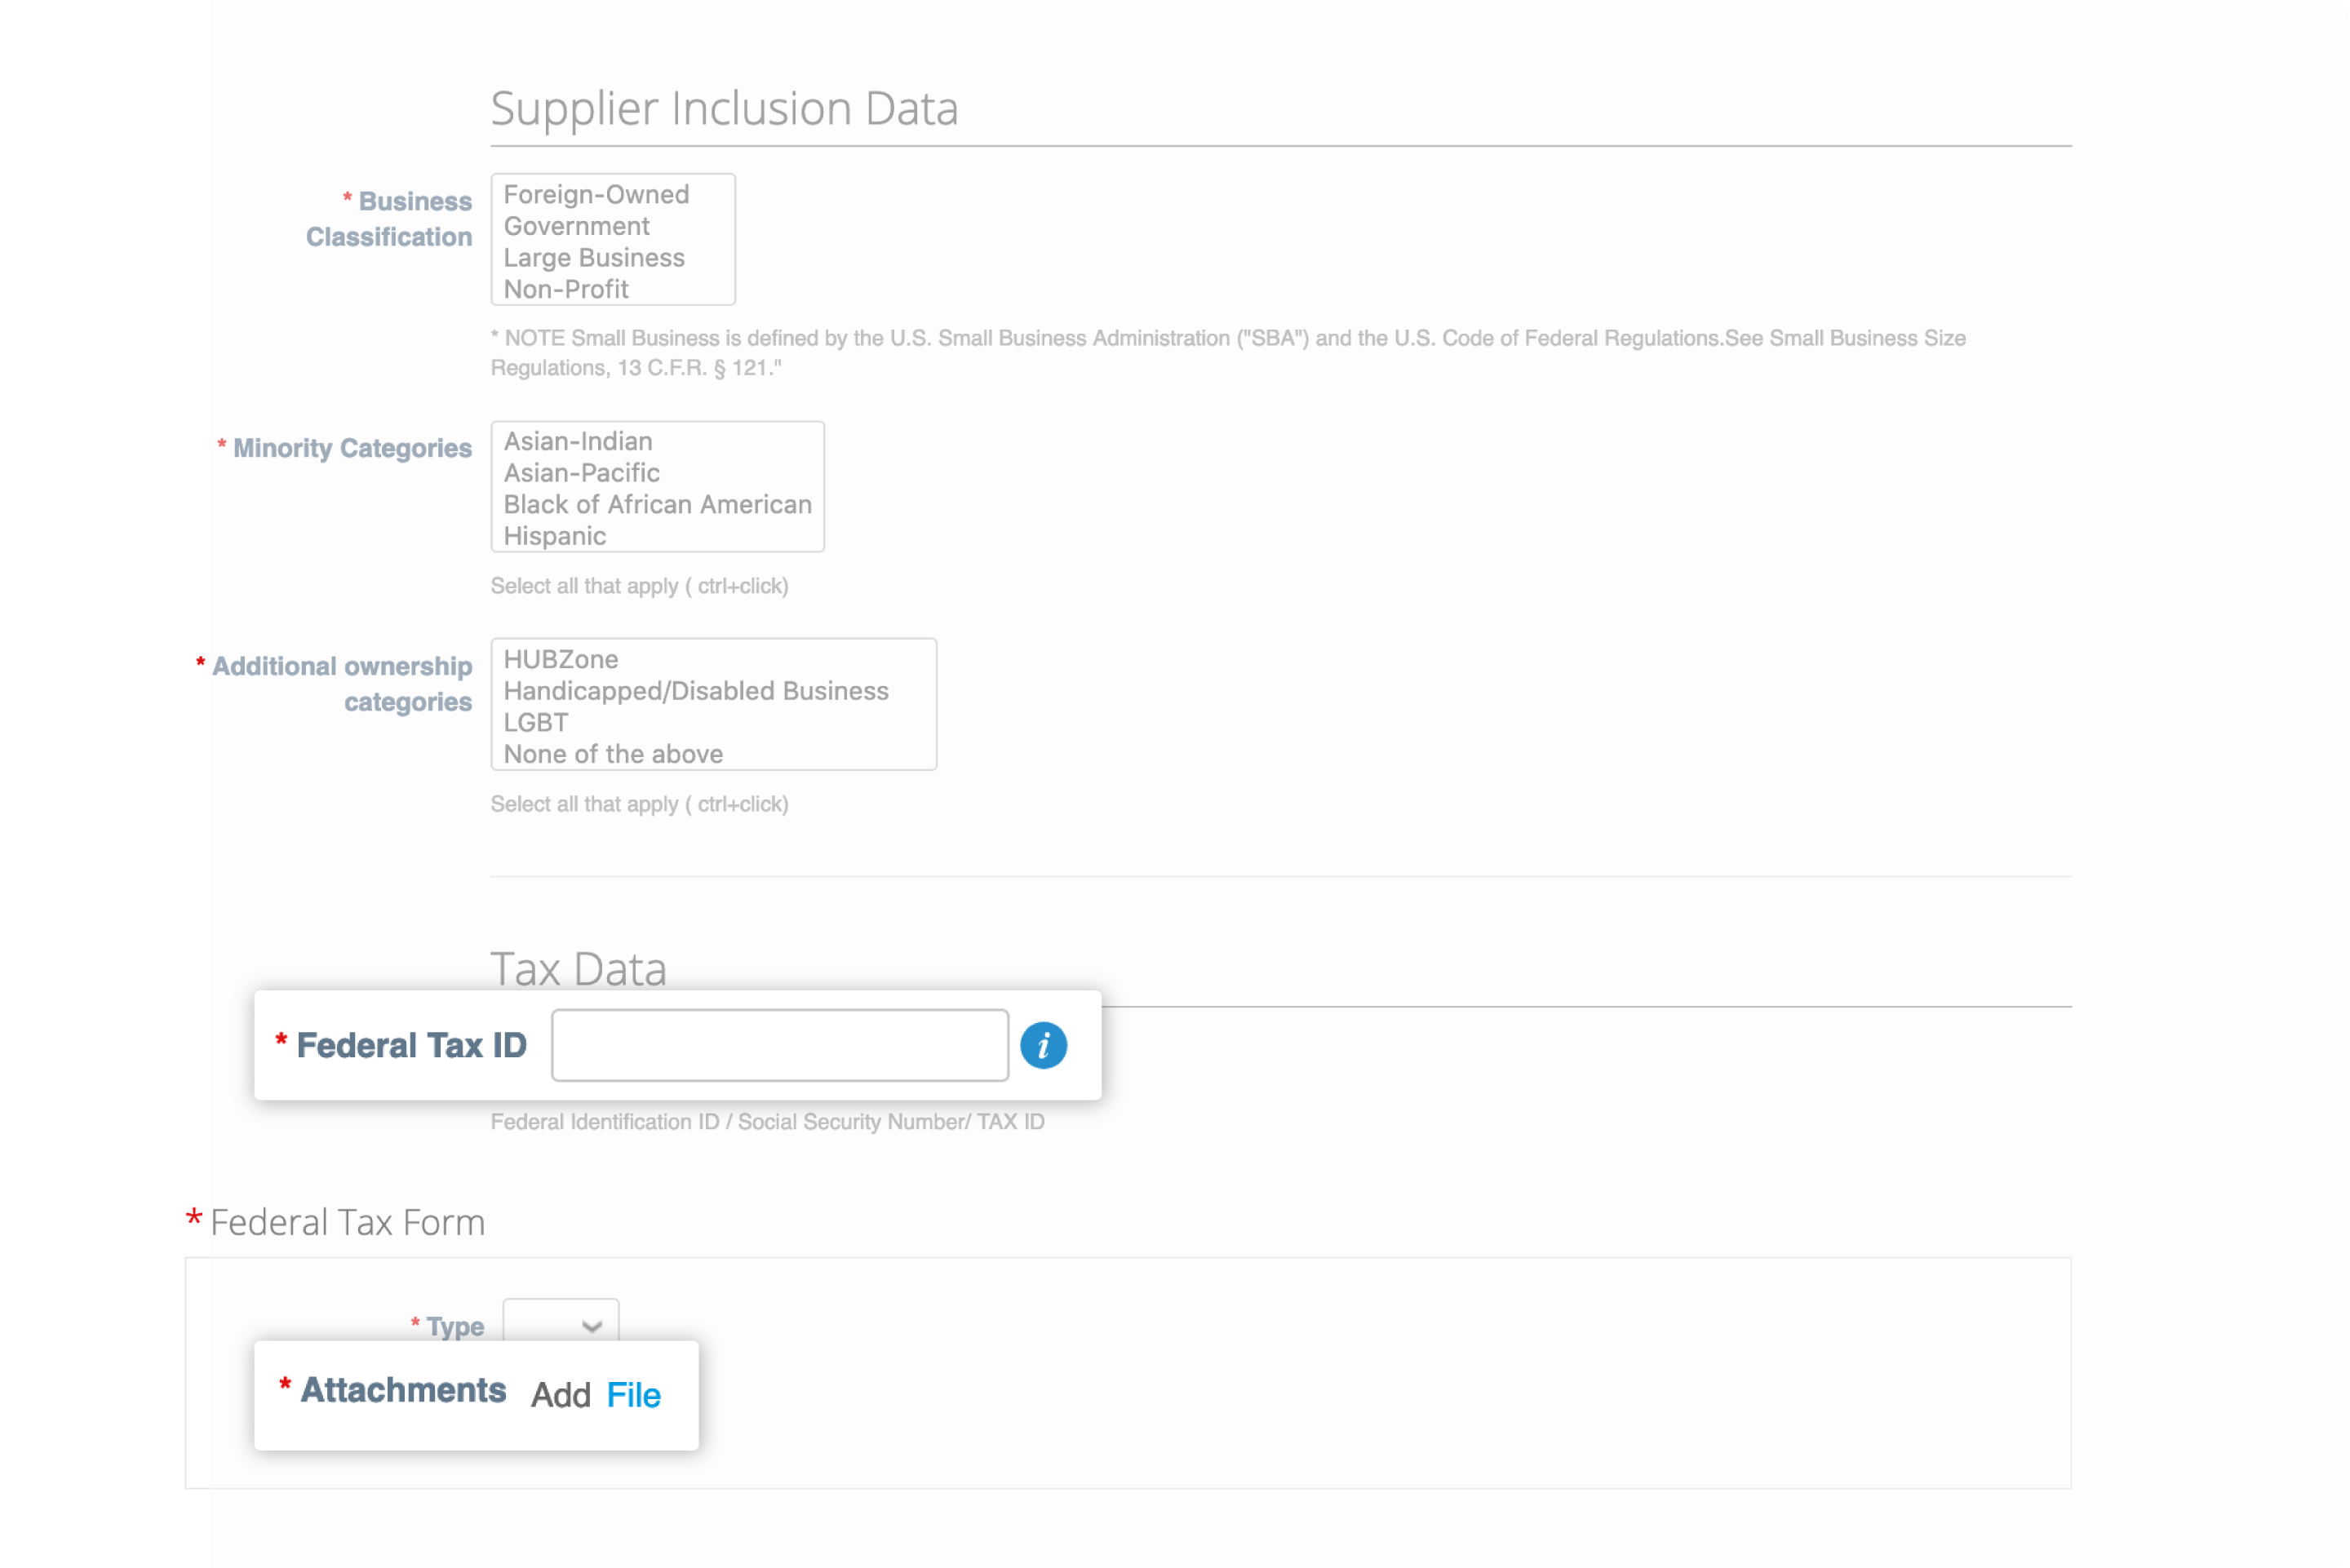 Supplier Inclusion Data Form